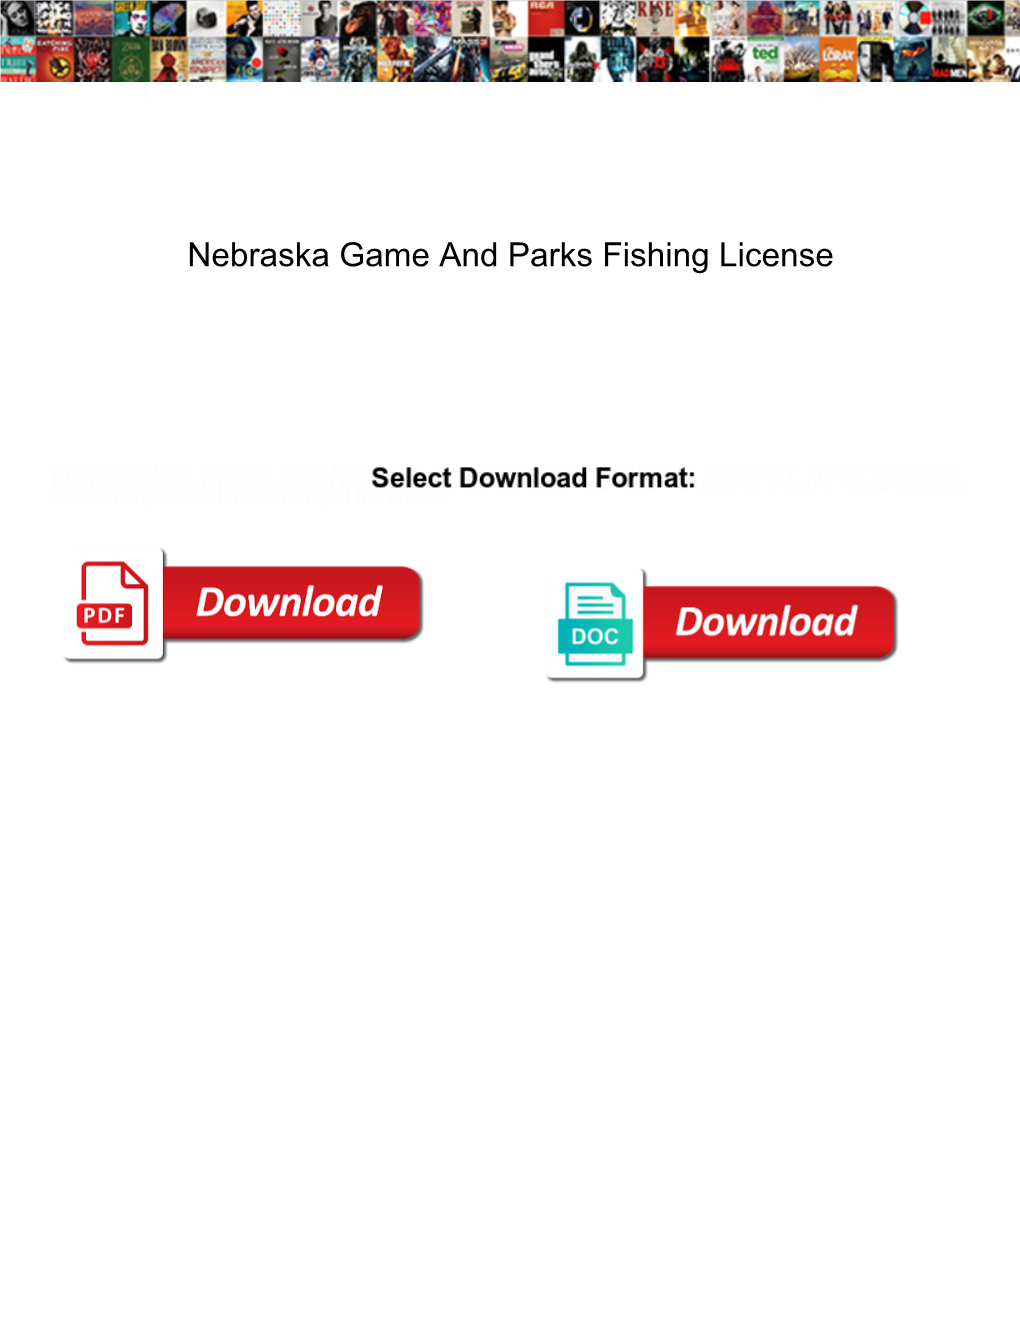 Nebraska Game and Parks Fishing License